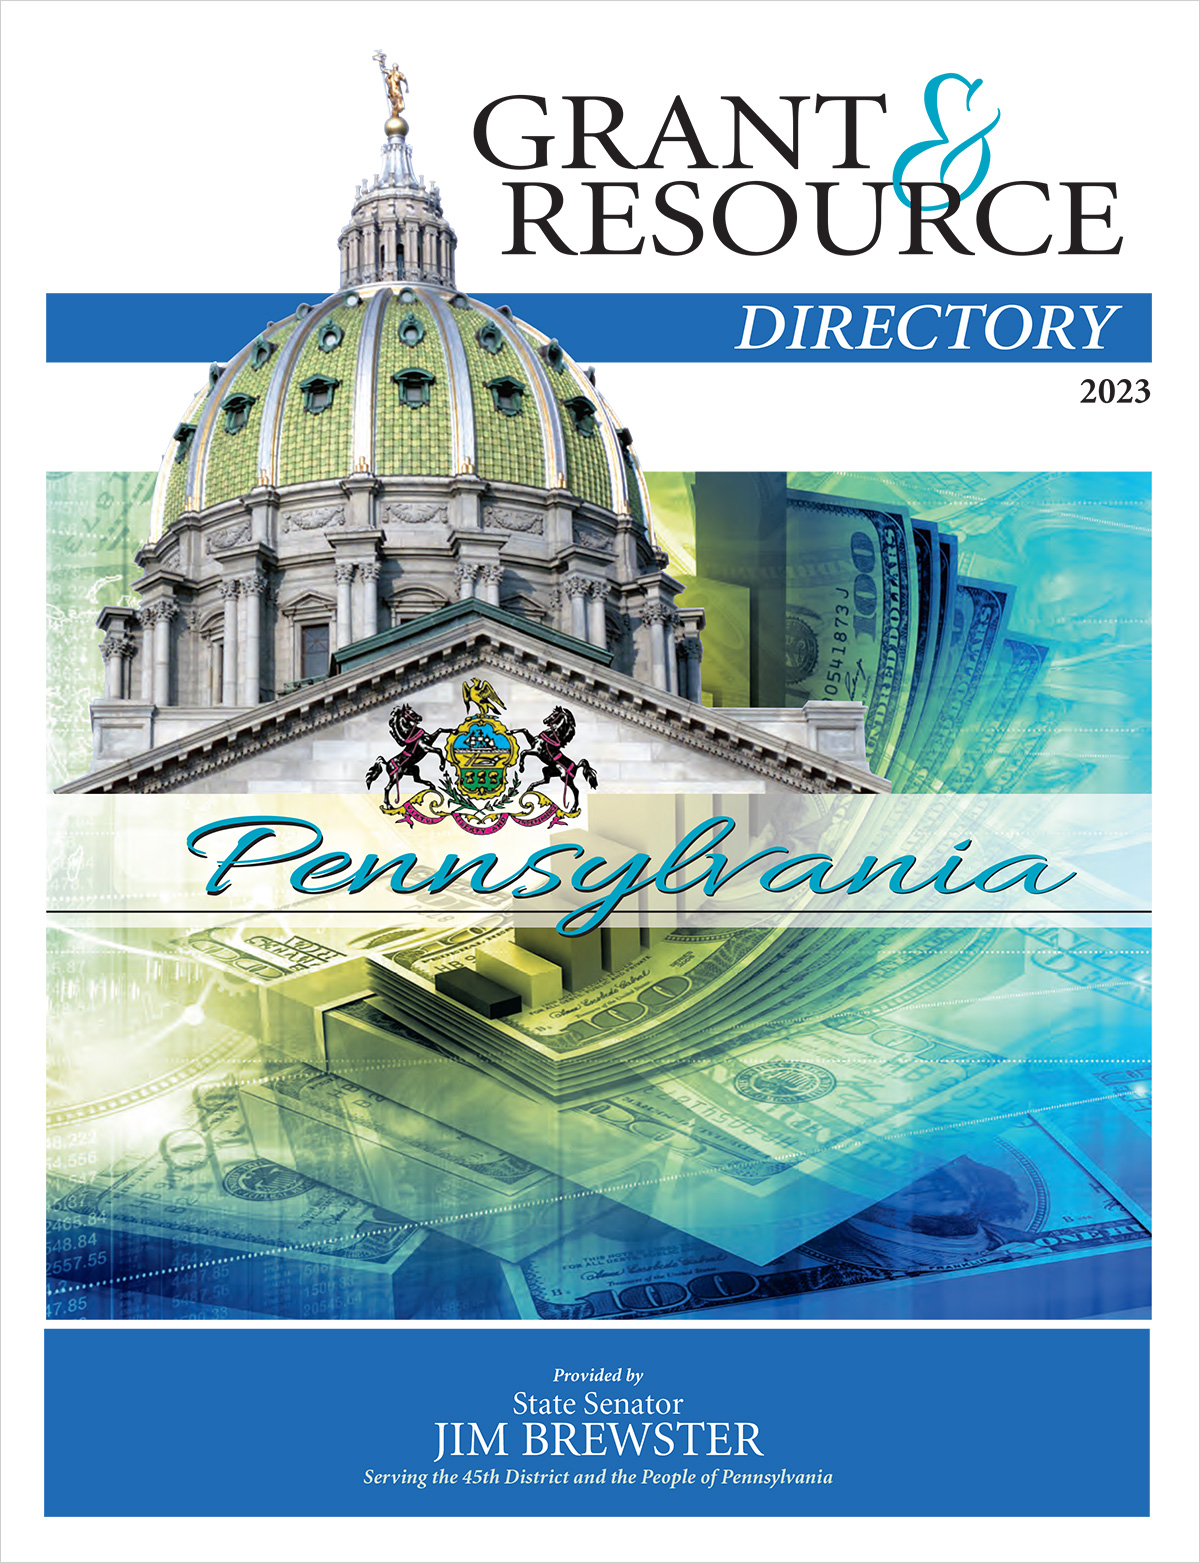 Grant Resource Directory 2023